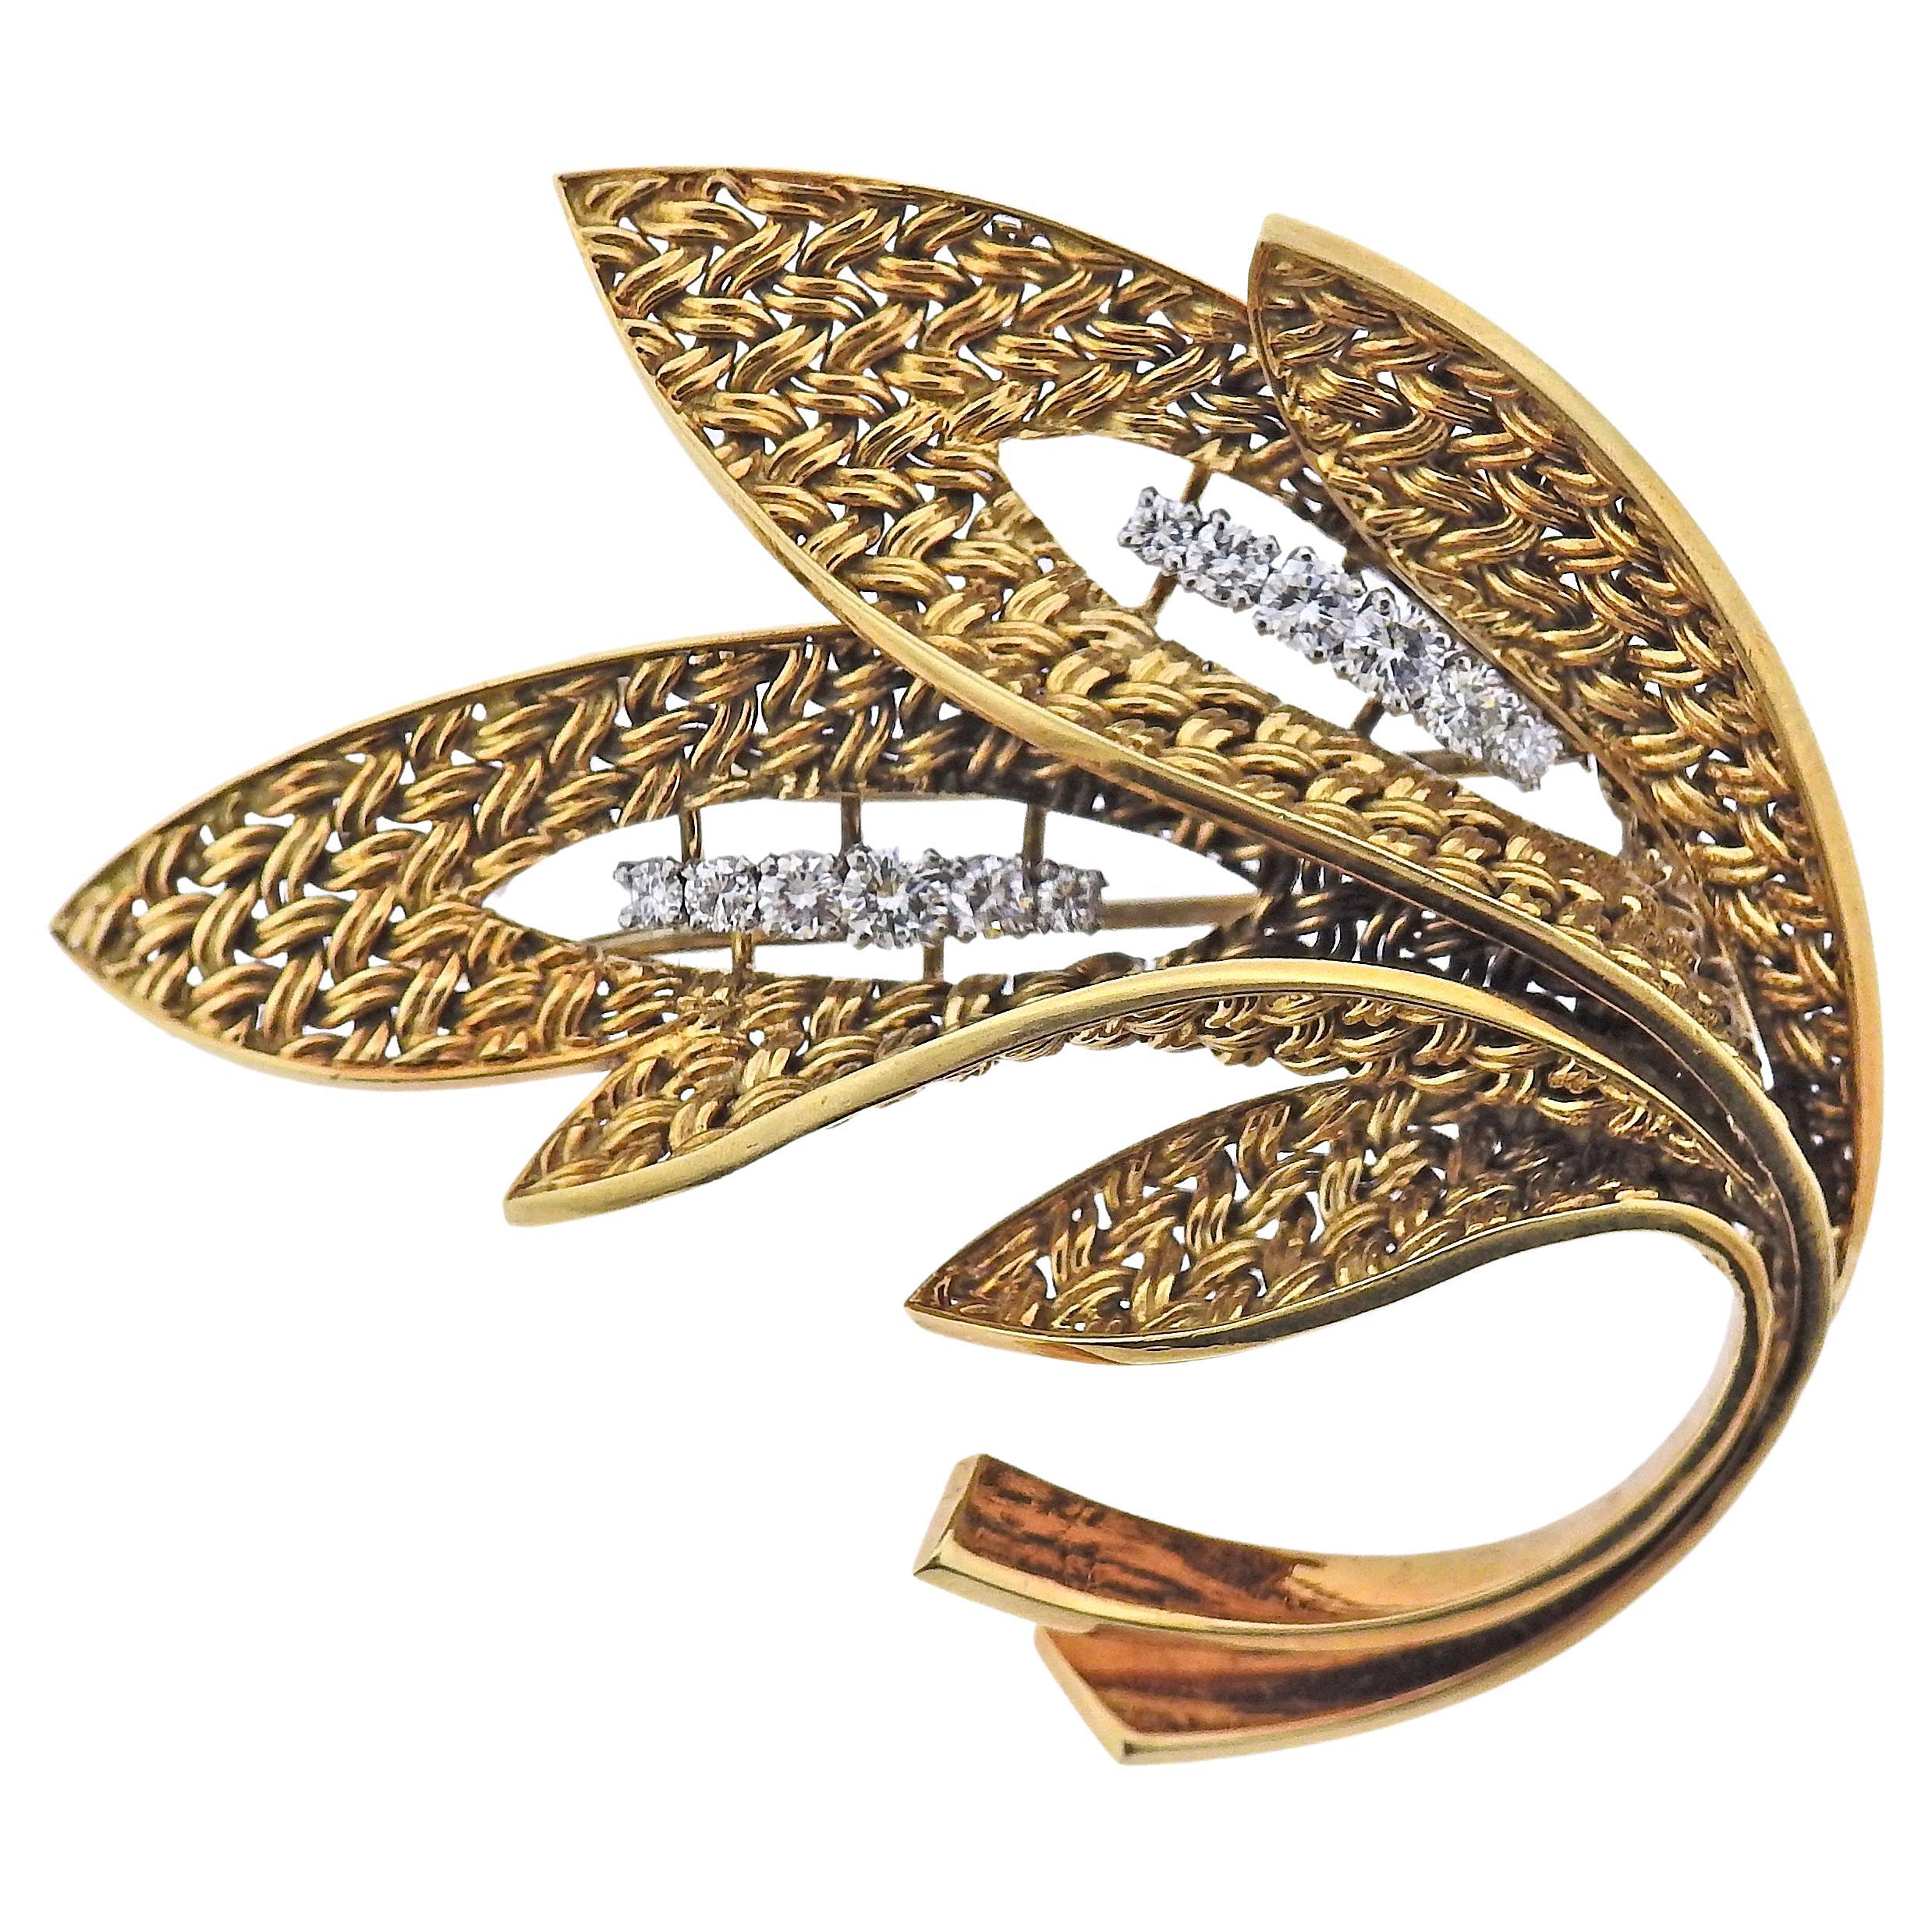 Alfiler broche francés de oro amarillo con diamantes de mediados de siglo